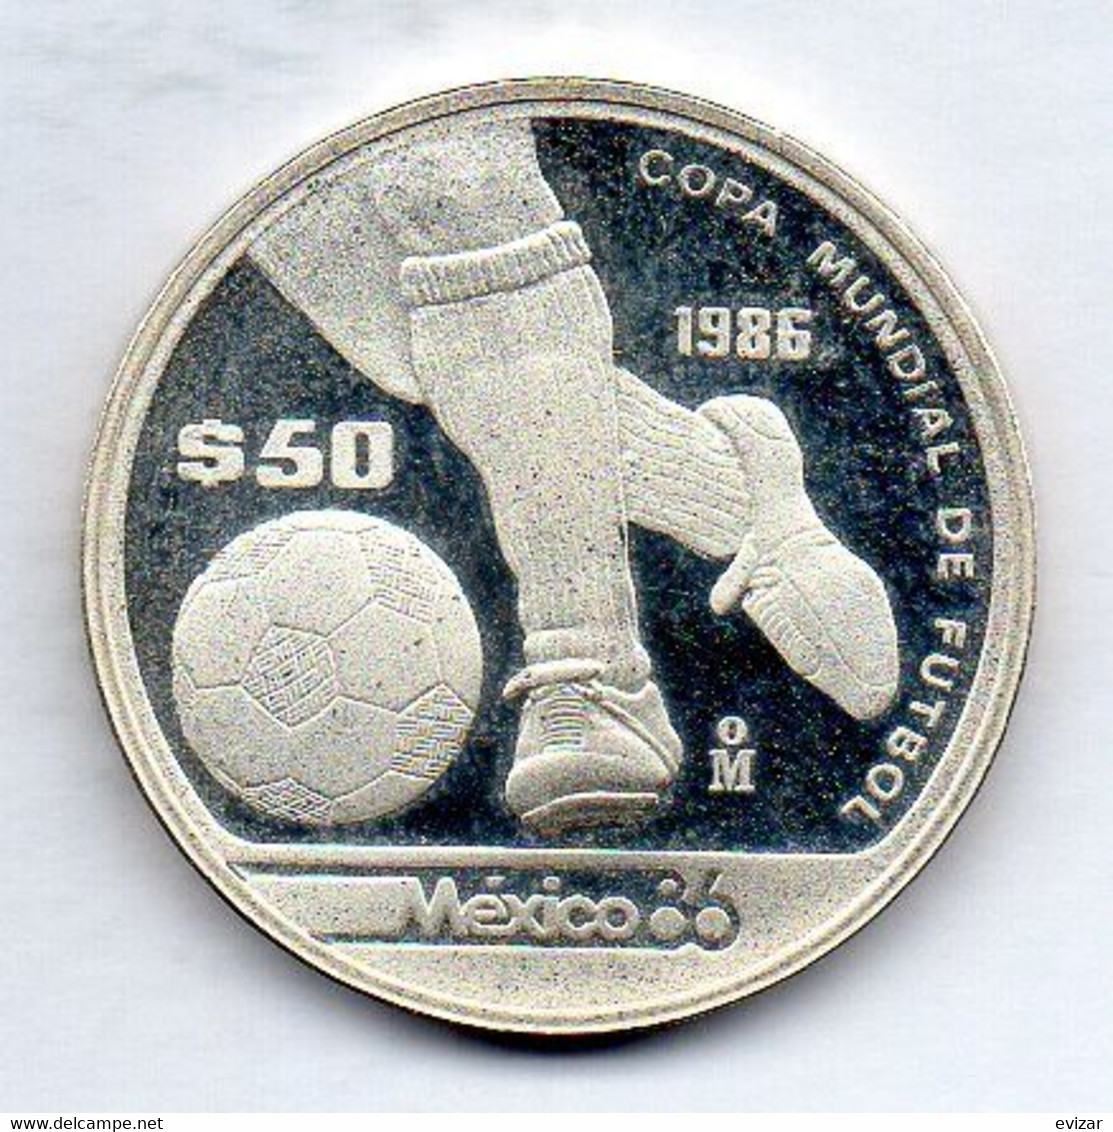 MEXICO, 50 Pesos, Silver, Year 1986, KM #498a, PROOF. - Mexico